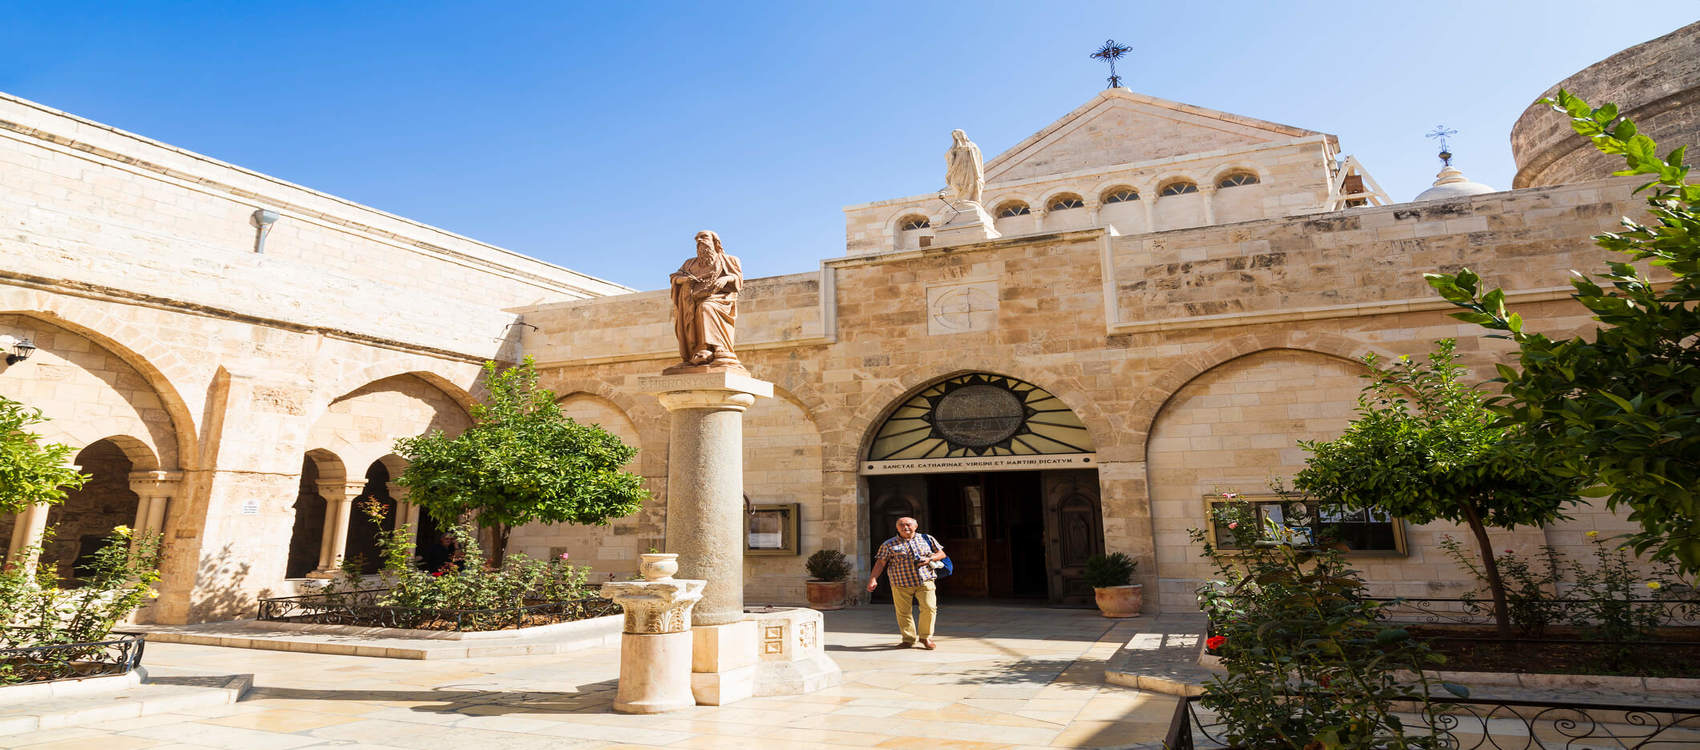 From Eilat: Jerusalem, Bethlehem and Dead Sea Tour $79.00